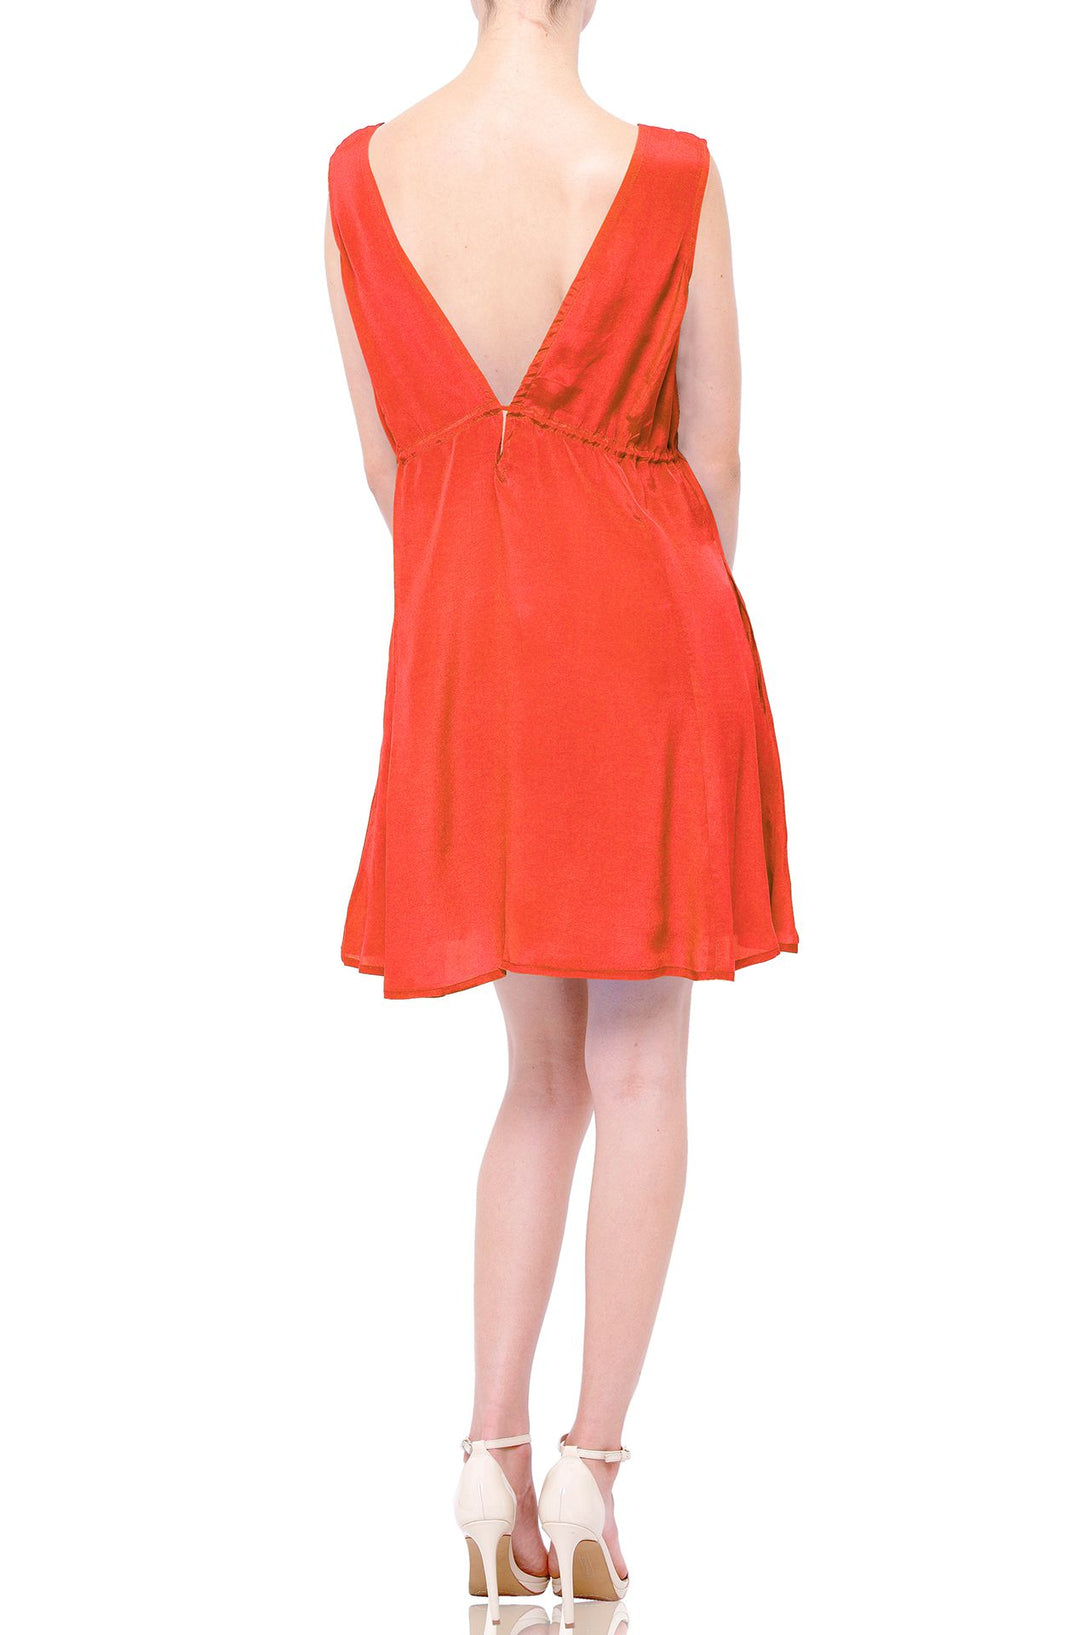  burnt orange mini dress, short sleeveless summer dresses,Shahida Parides, mini frock for women,